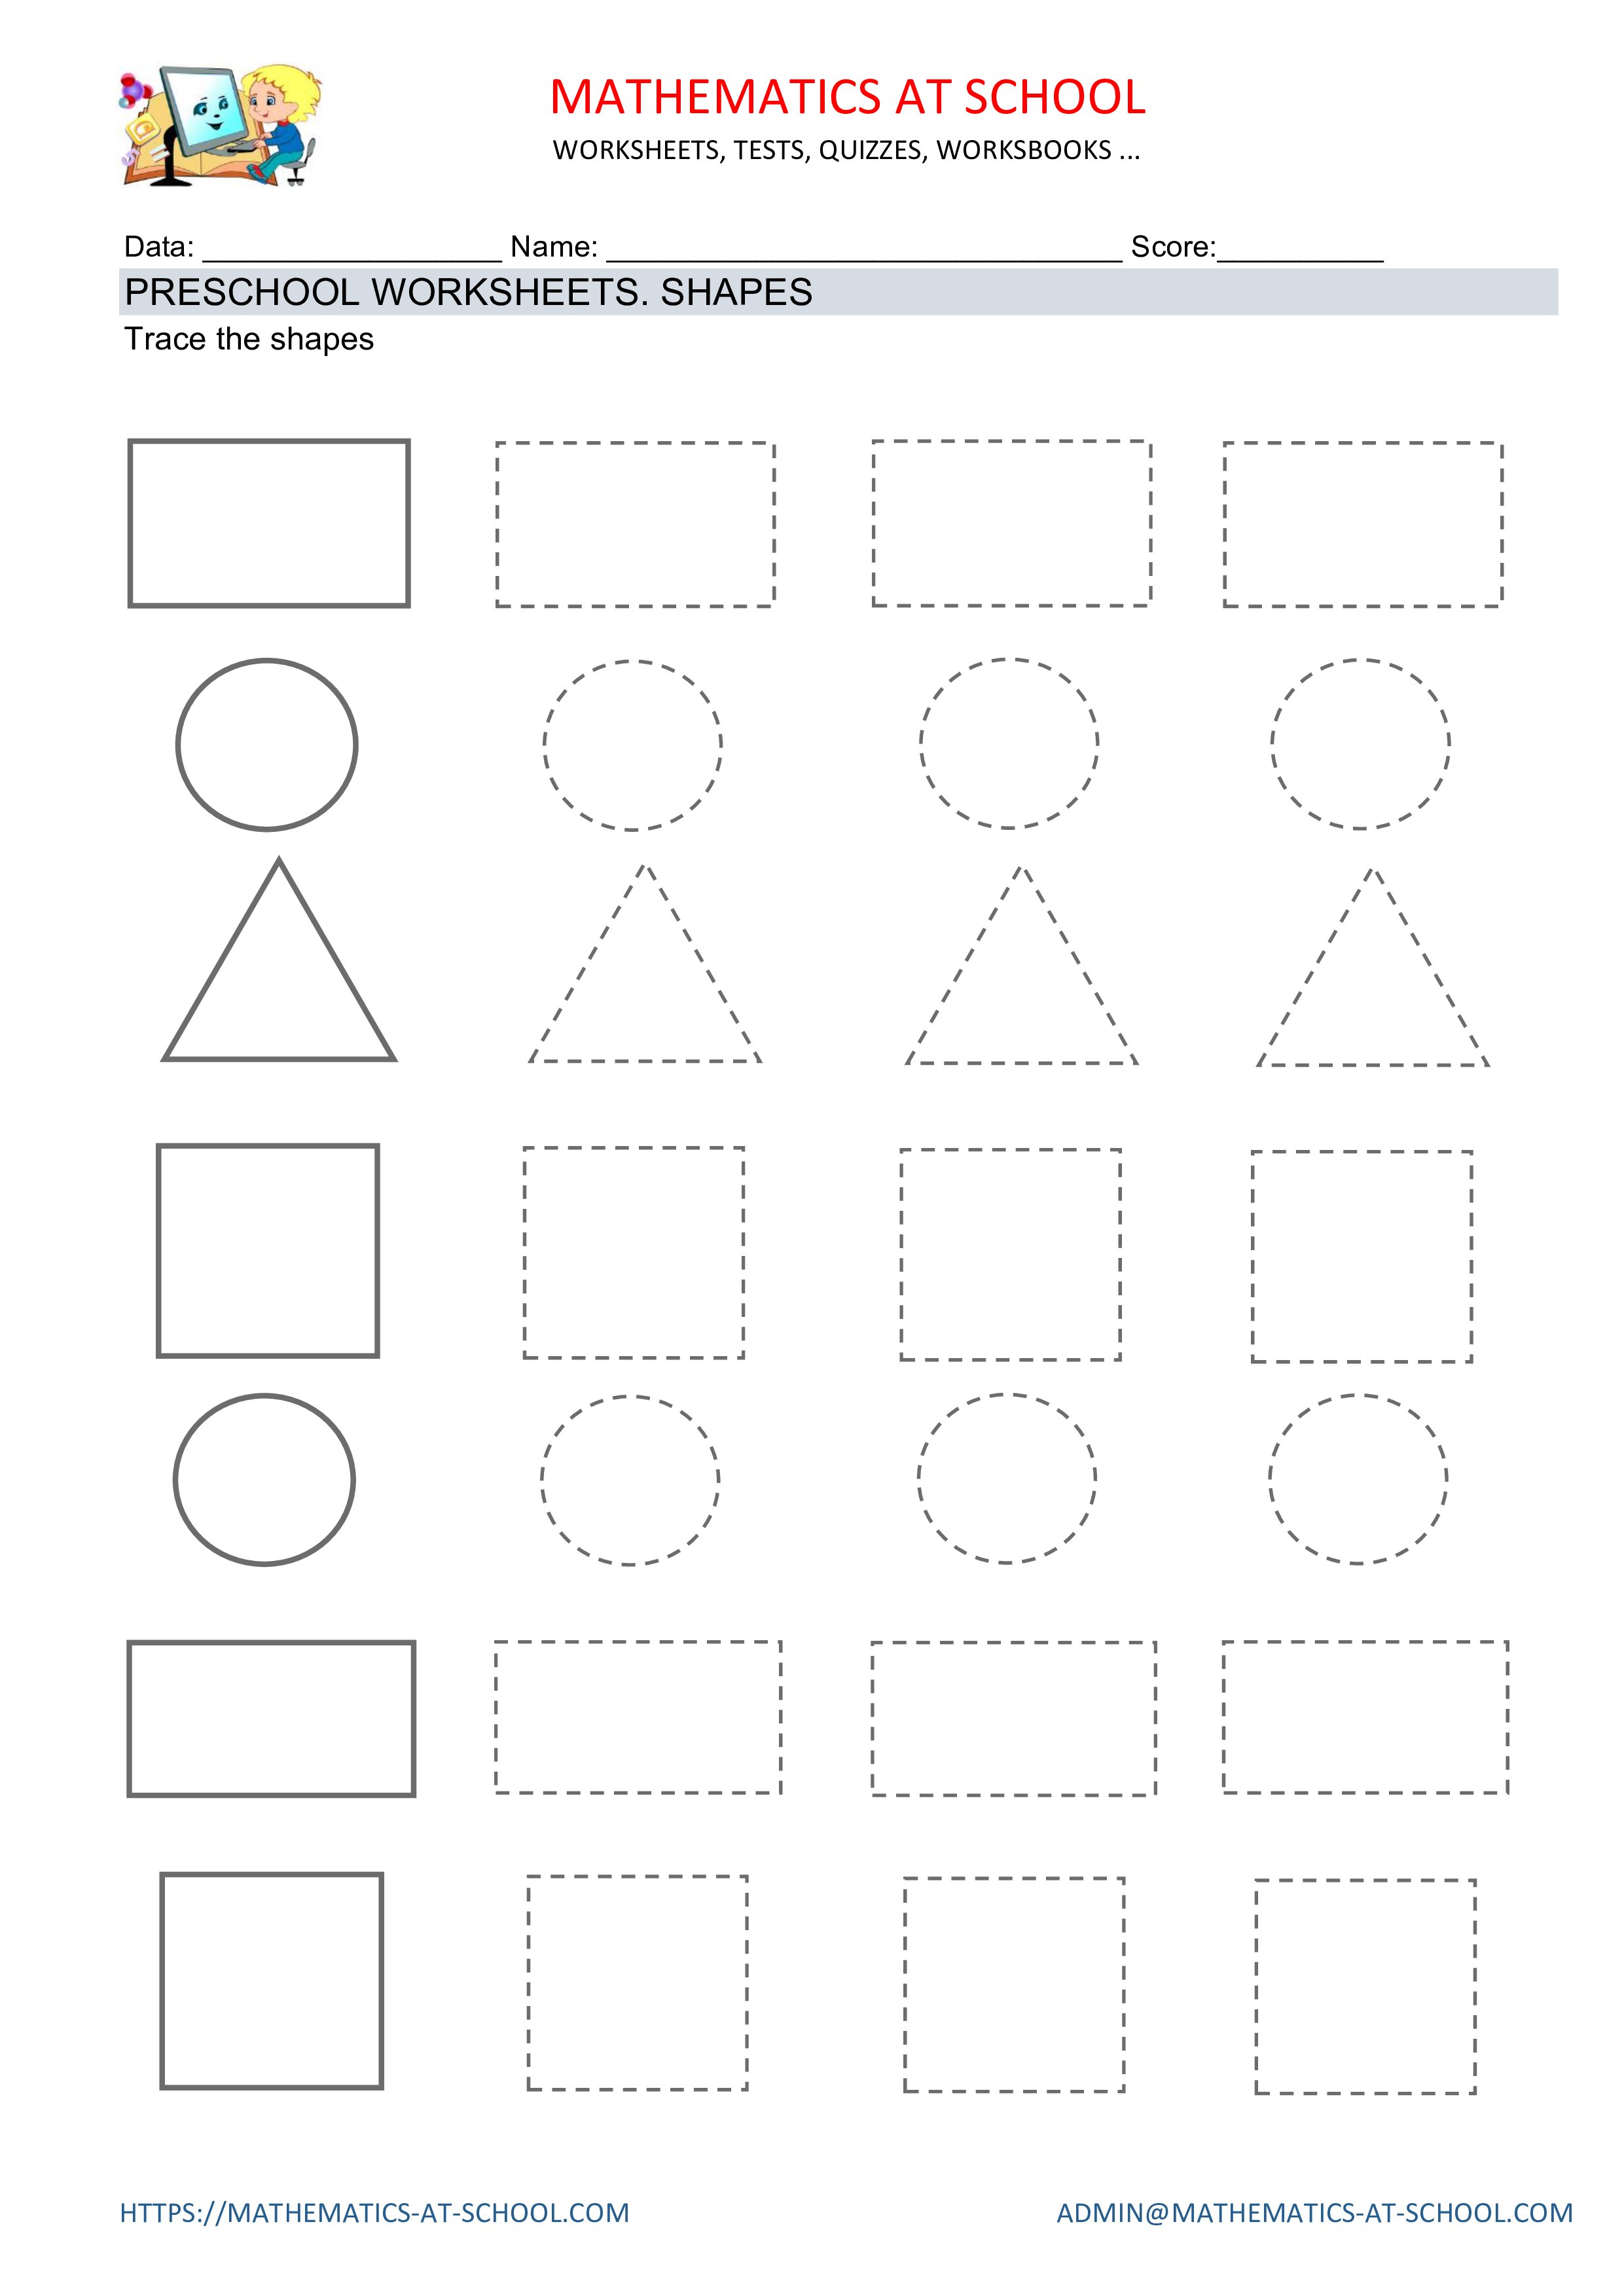 mathematics school on twitter preschool math worksheets shapes free printable pdf preschool math worksheets shapes circle rectangle triangle square https t co ue5k4mcsiy https t co h4z3b45ftu twitter